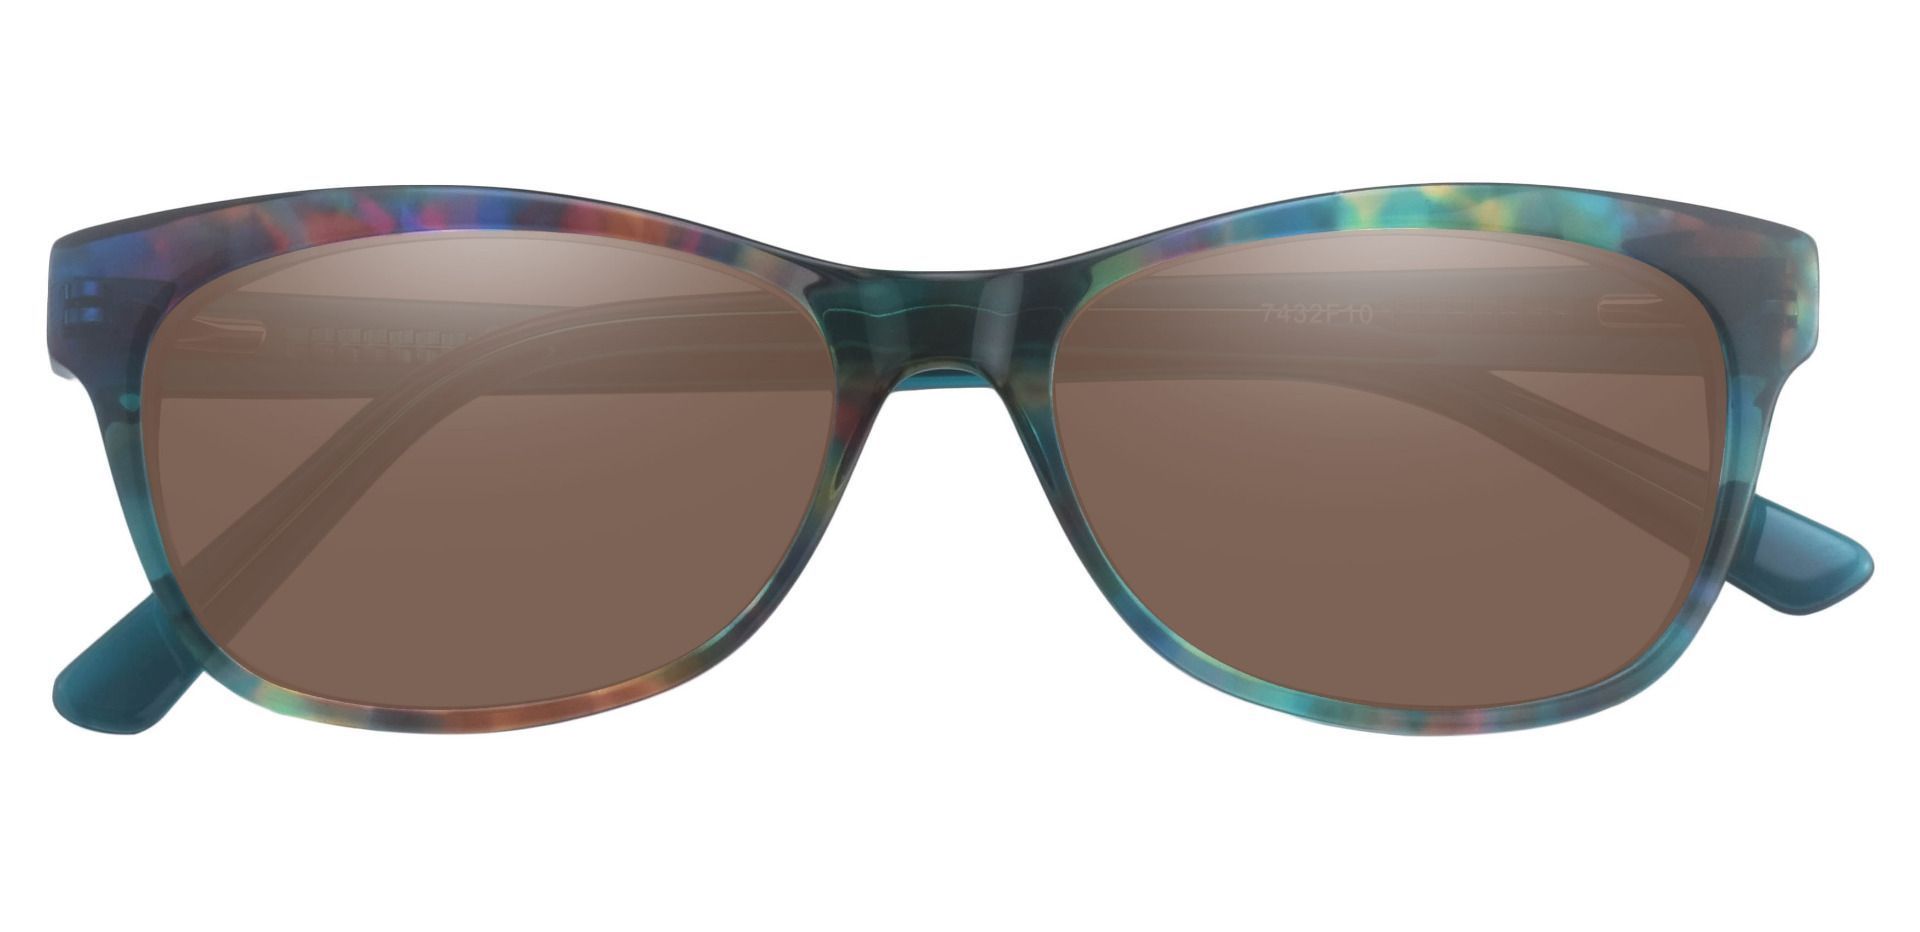 Download Nova Cat Eye Prescription Sunglasses - Floral Frame With ...